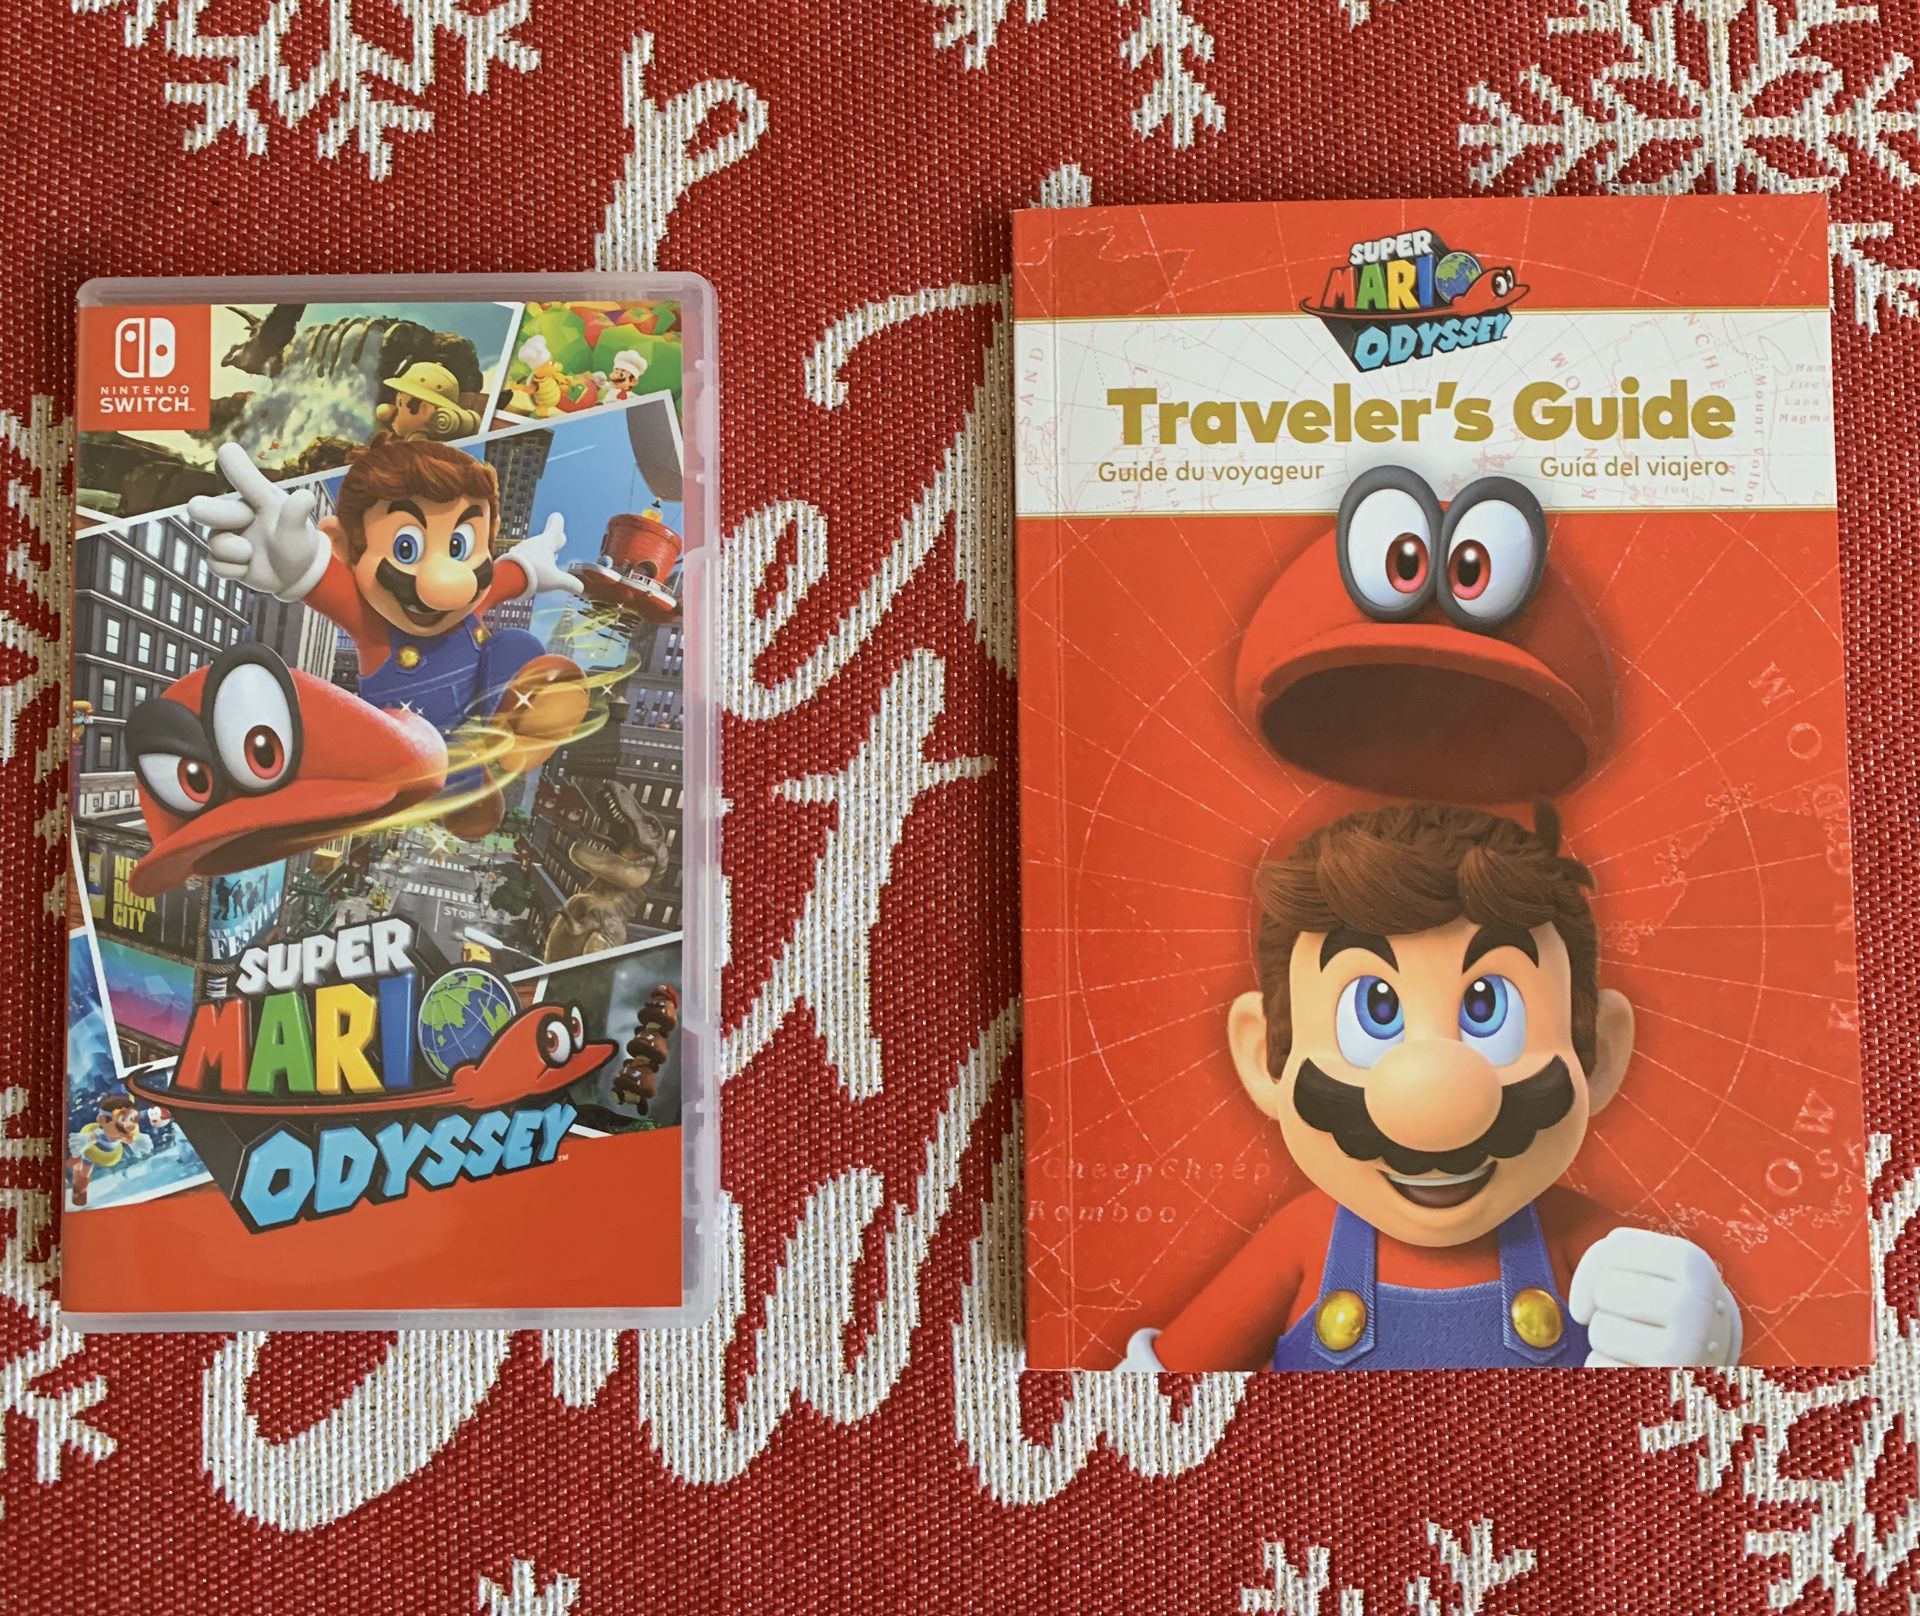 Super Mario Odyssey with Bonus Travelers Guide for Nintendo Switch